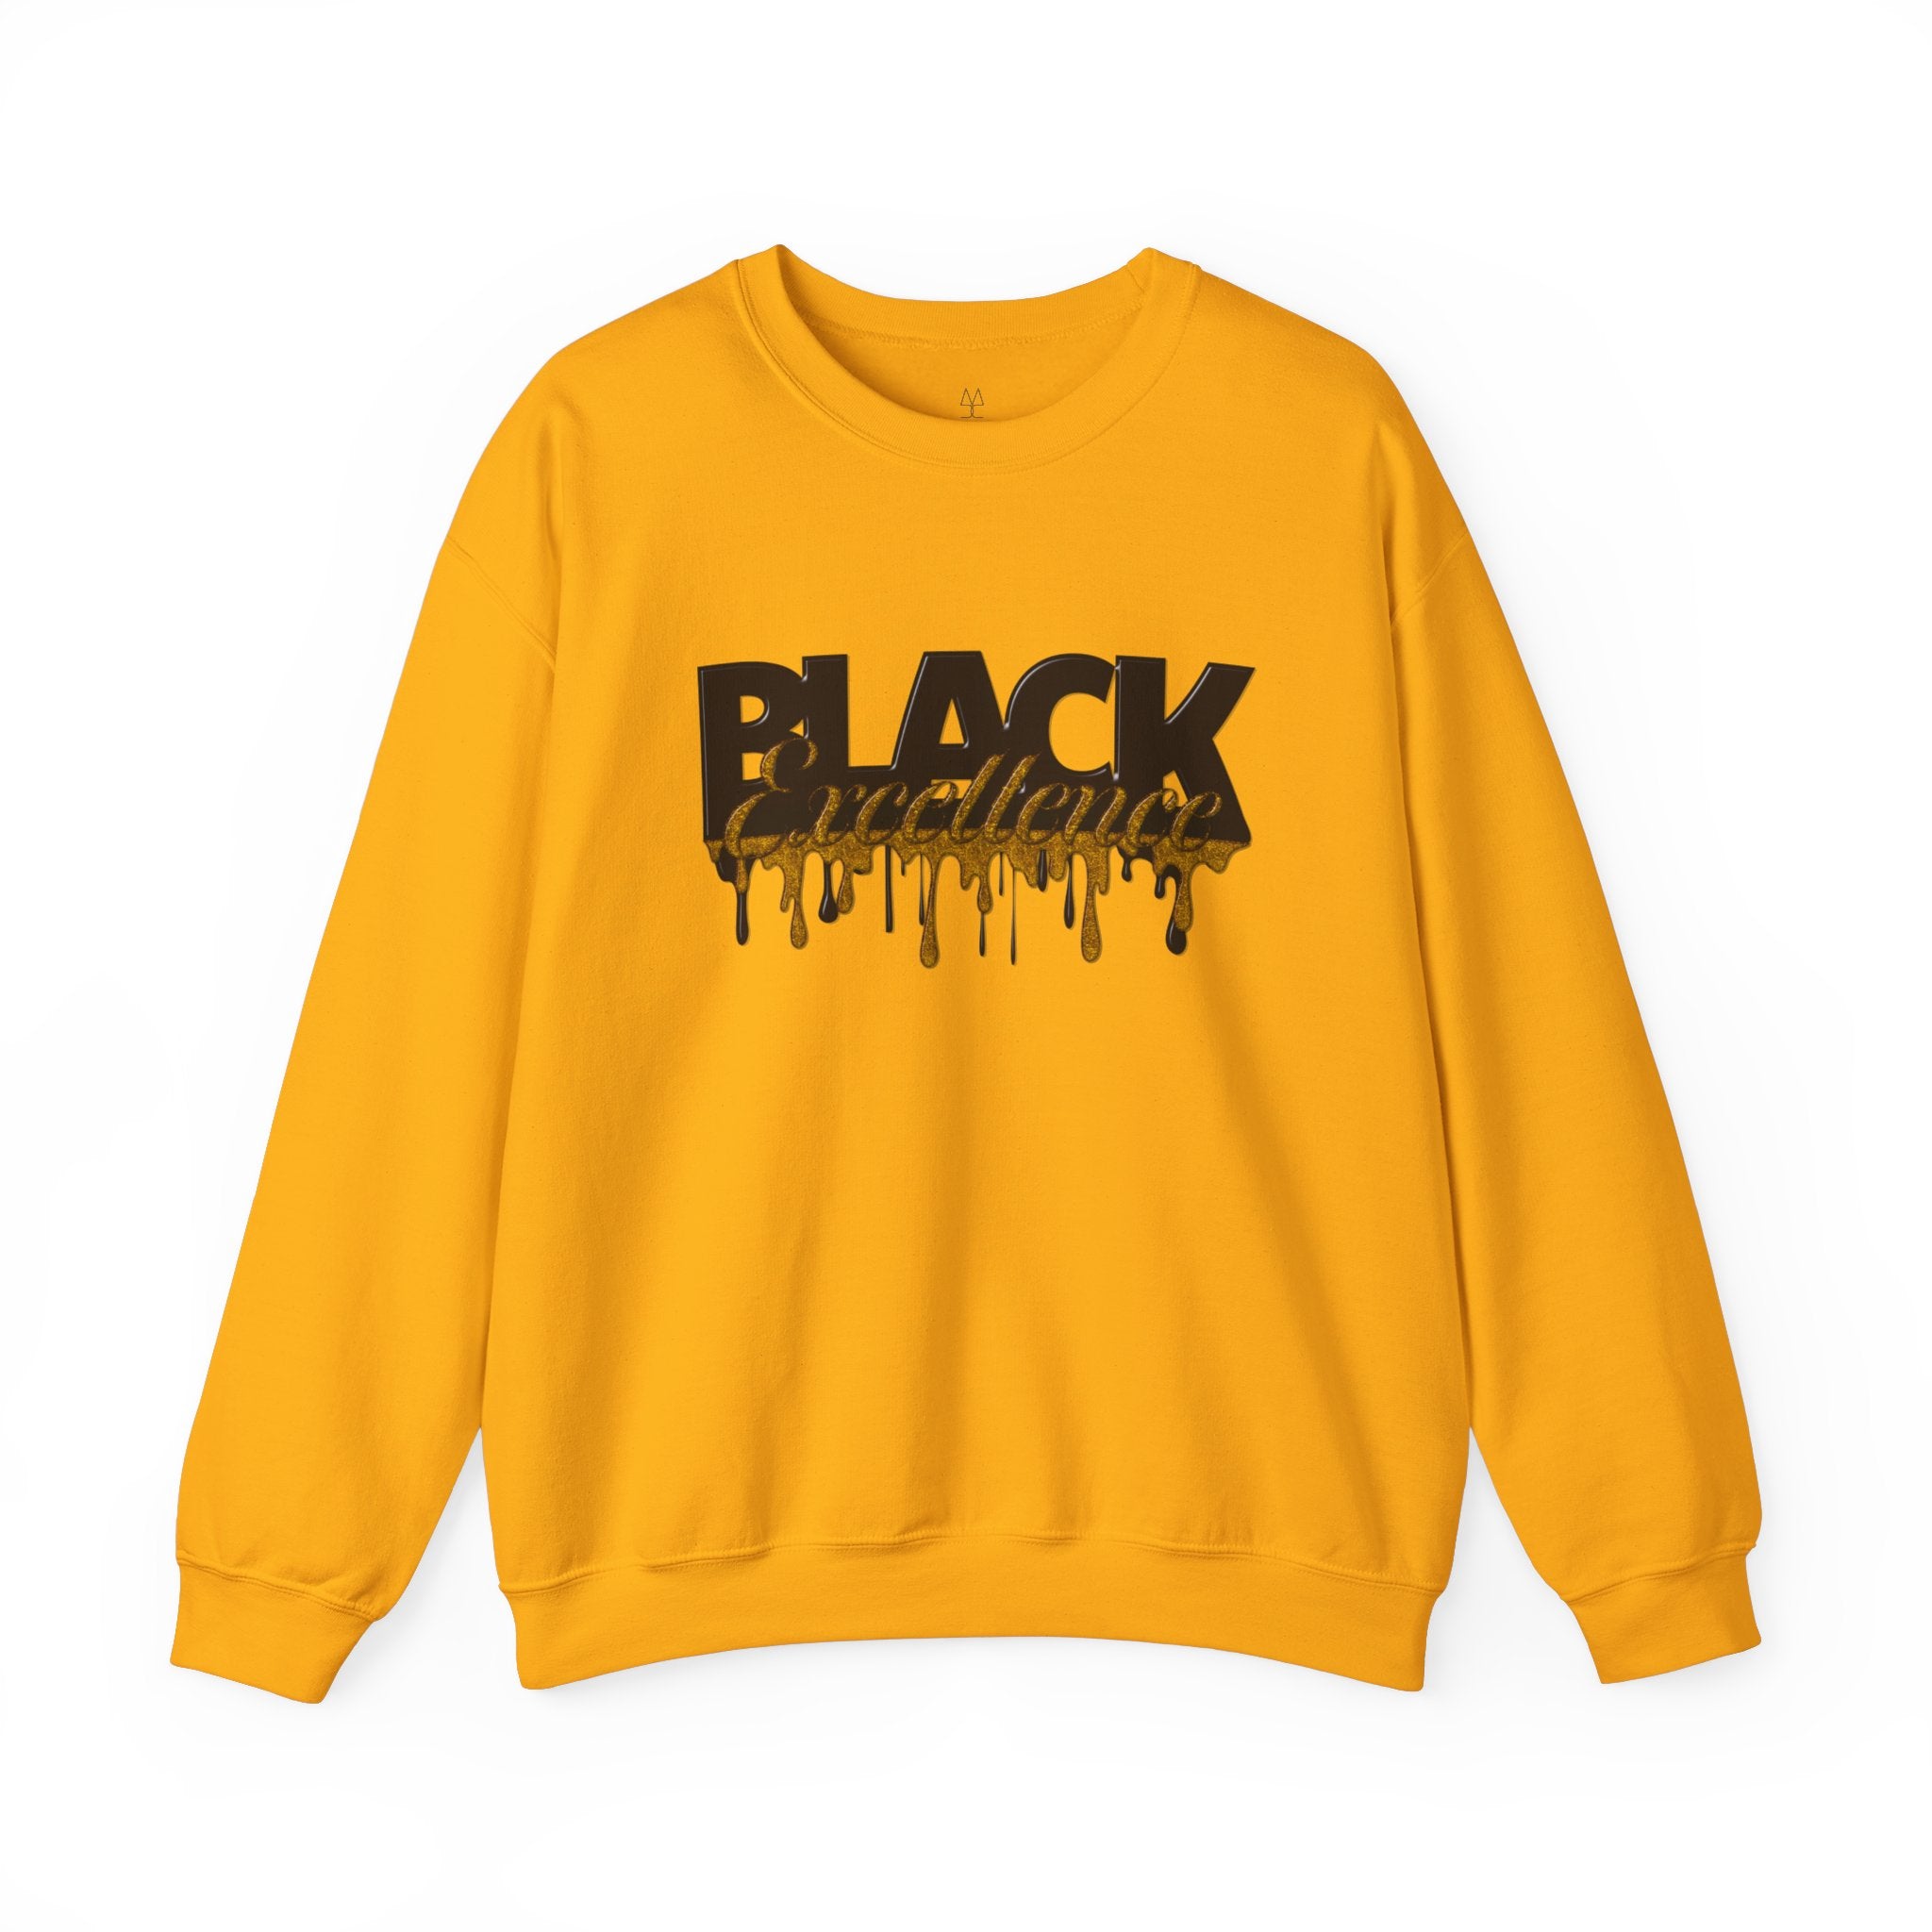 Black Excellence long sleeve sweatshirt in gold.